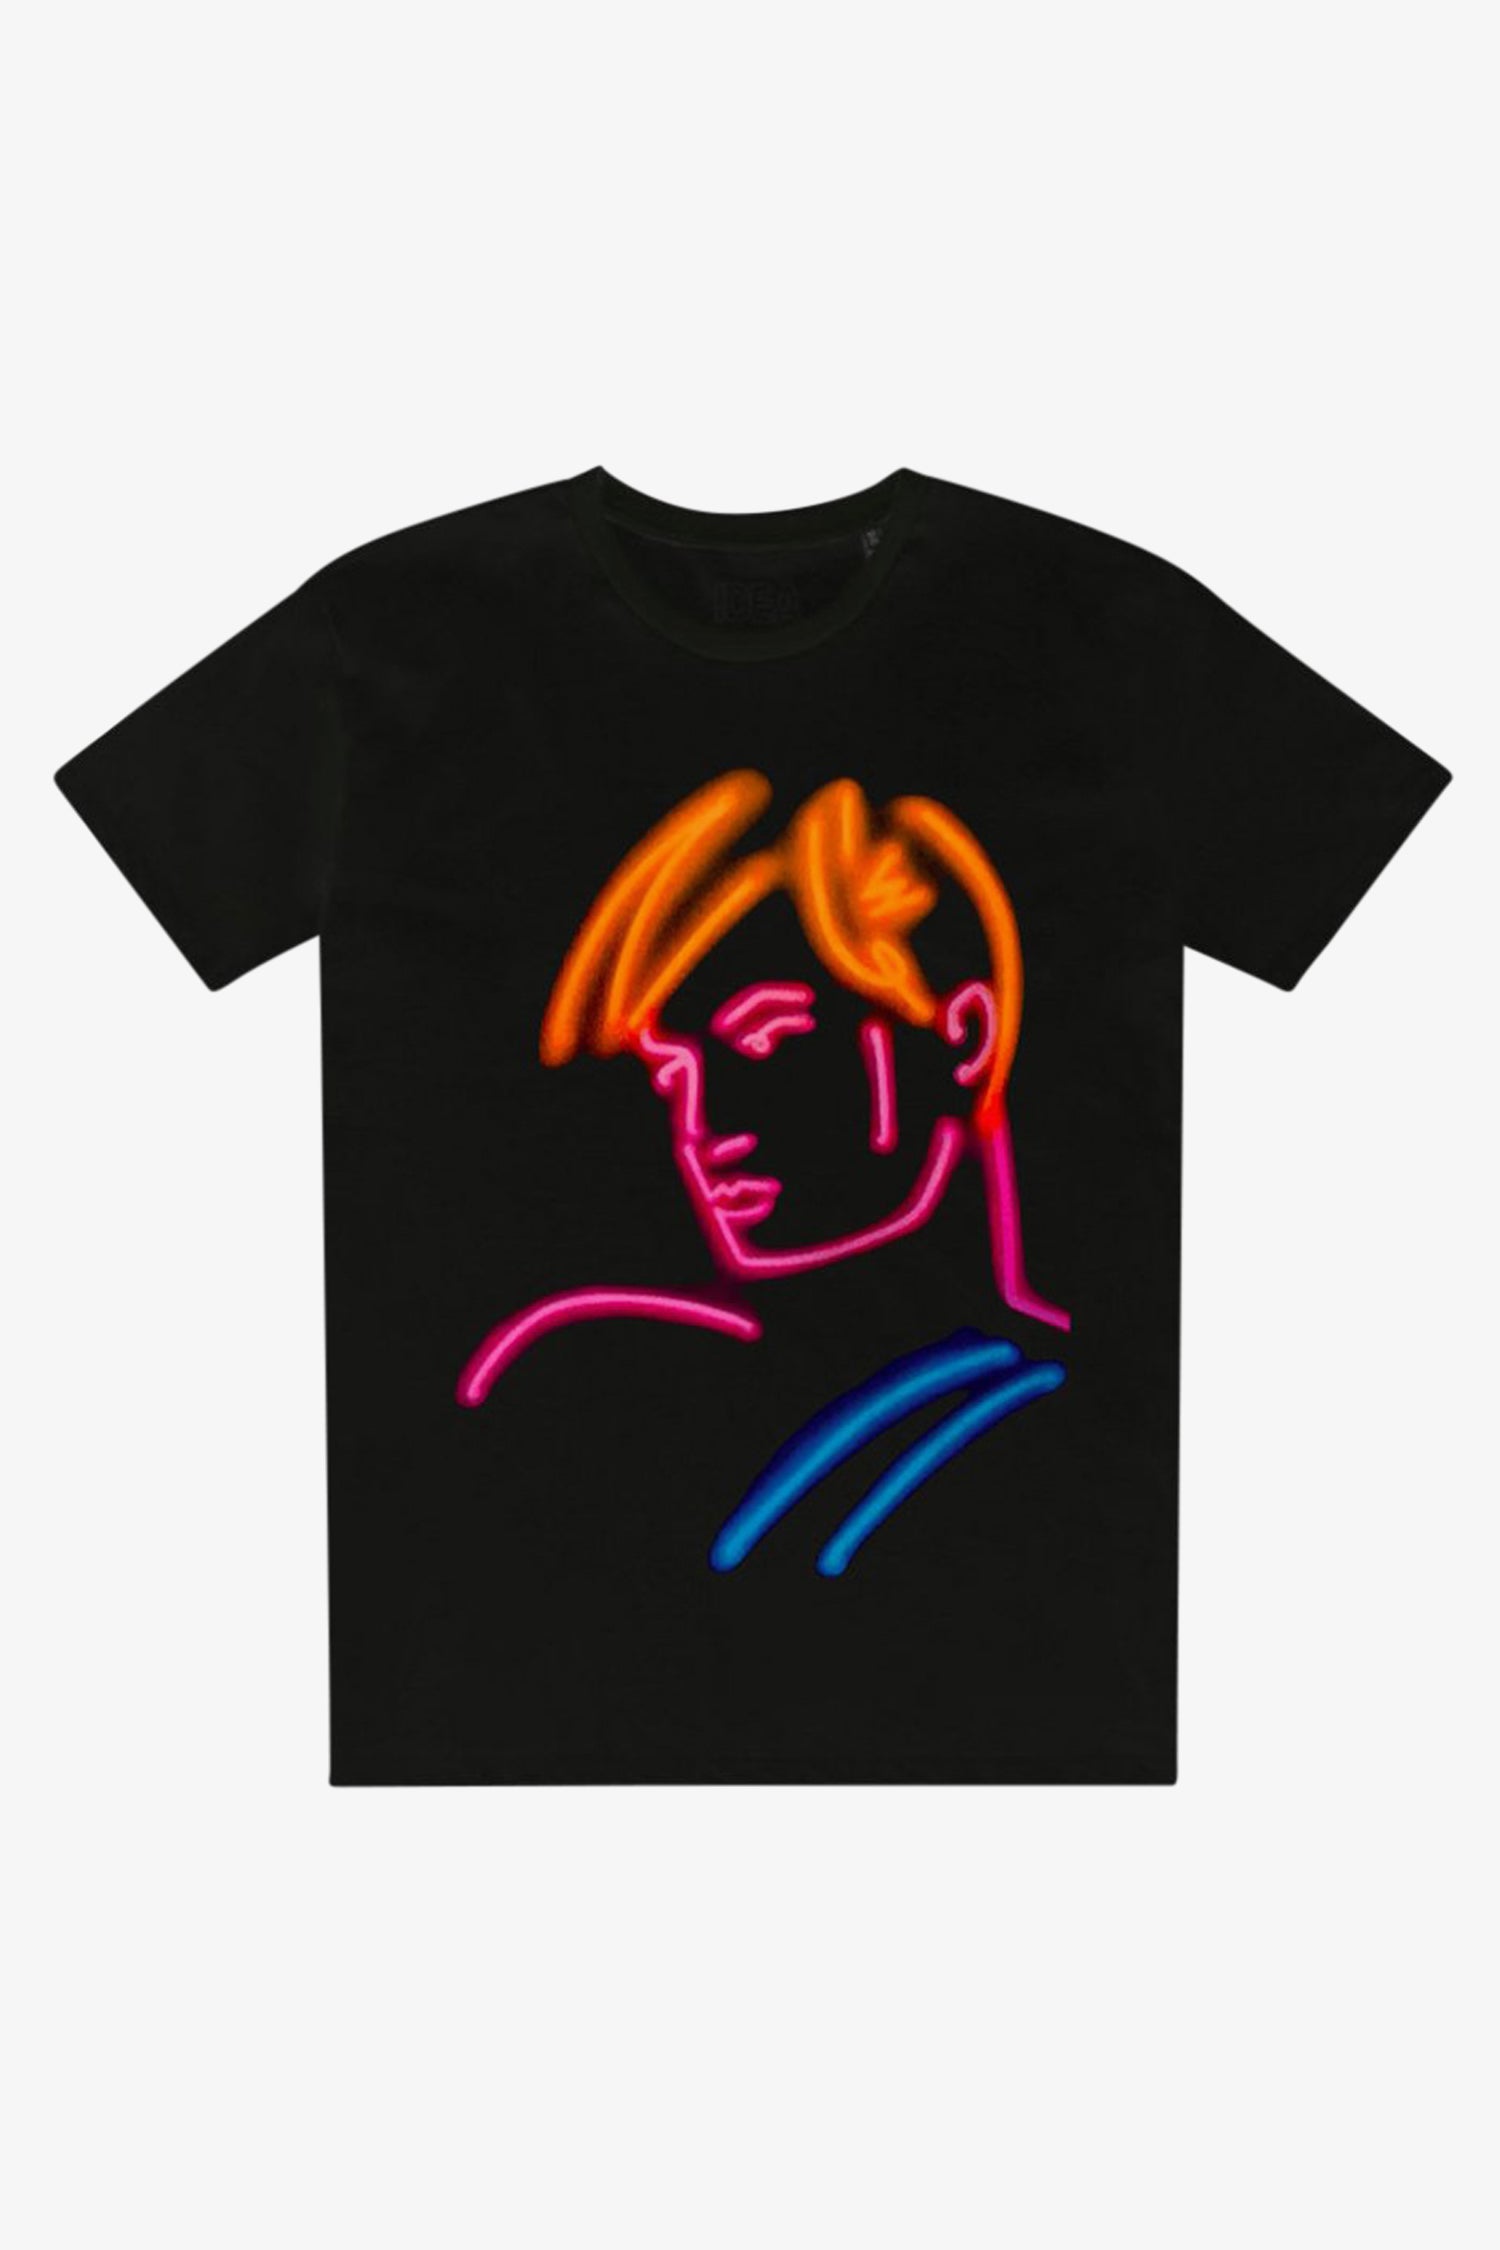 Selectshop FRAME - IDEA Neon Boy by Philippe Morillon T-Shirt T-Shirt Dubai